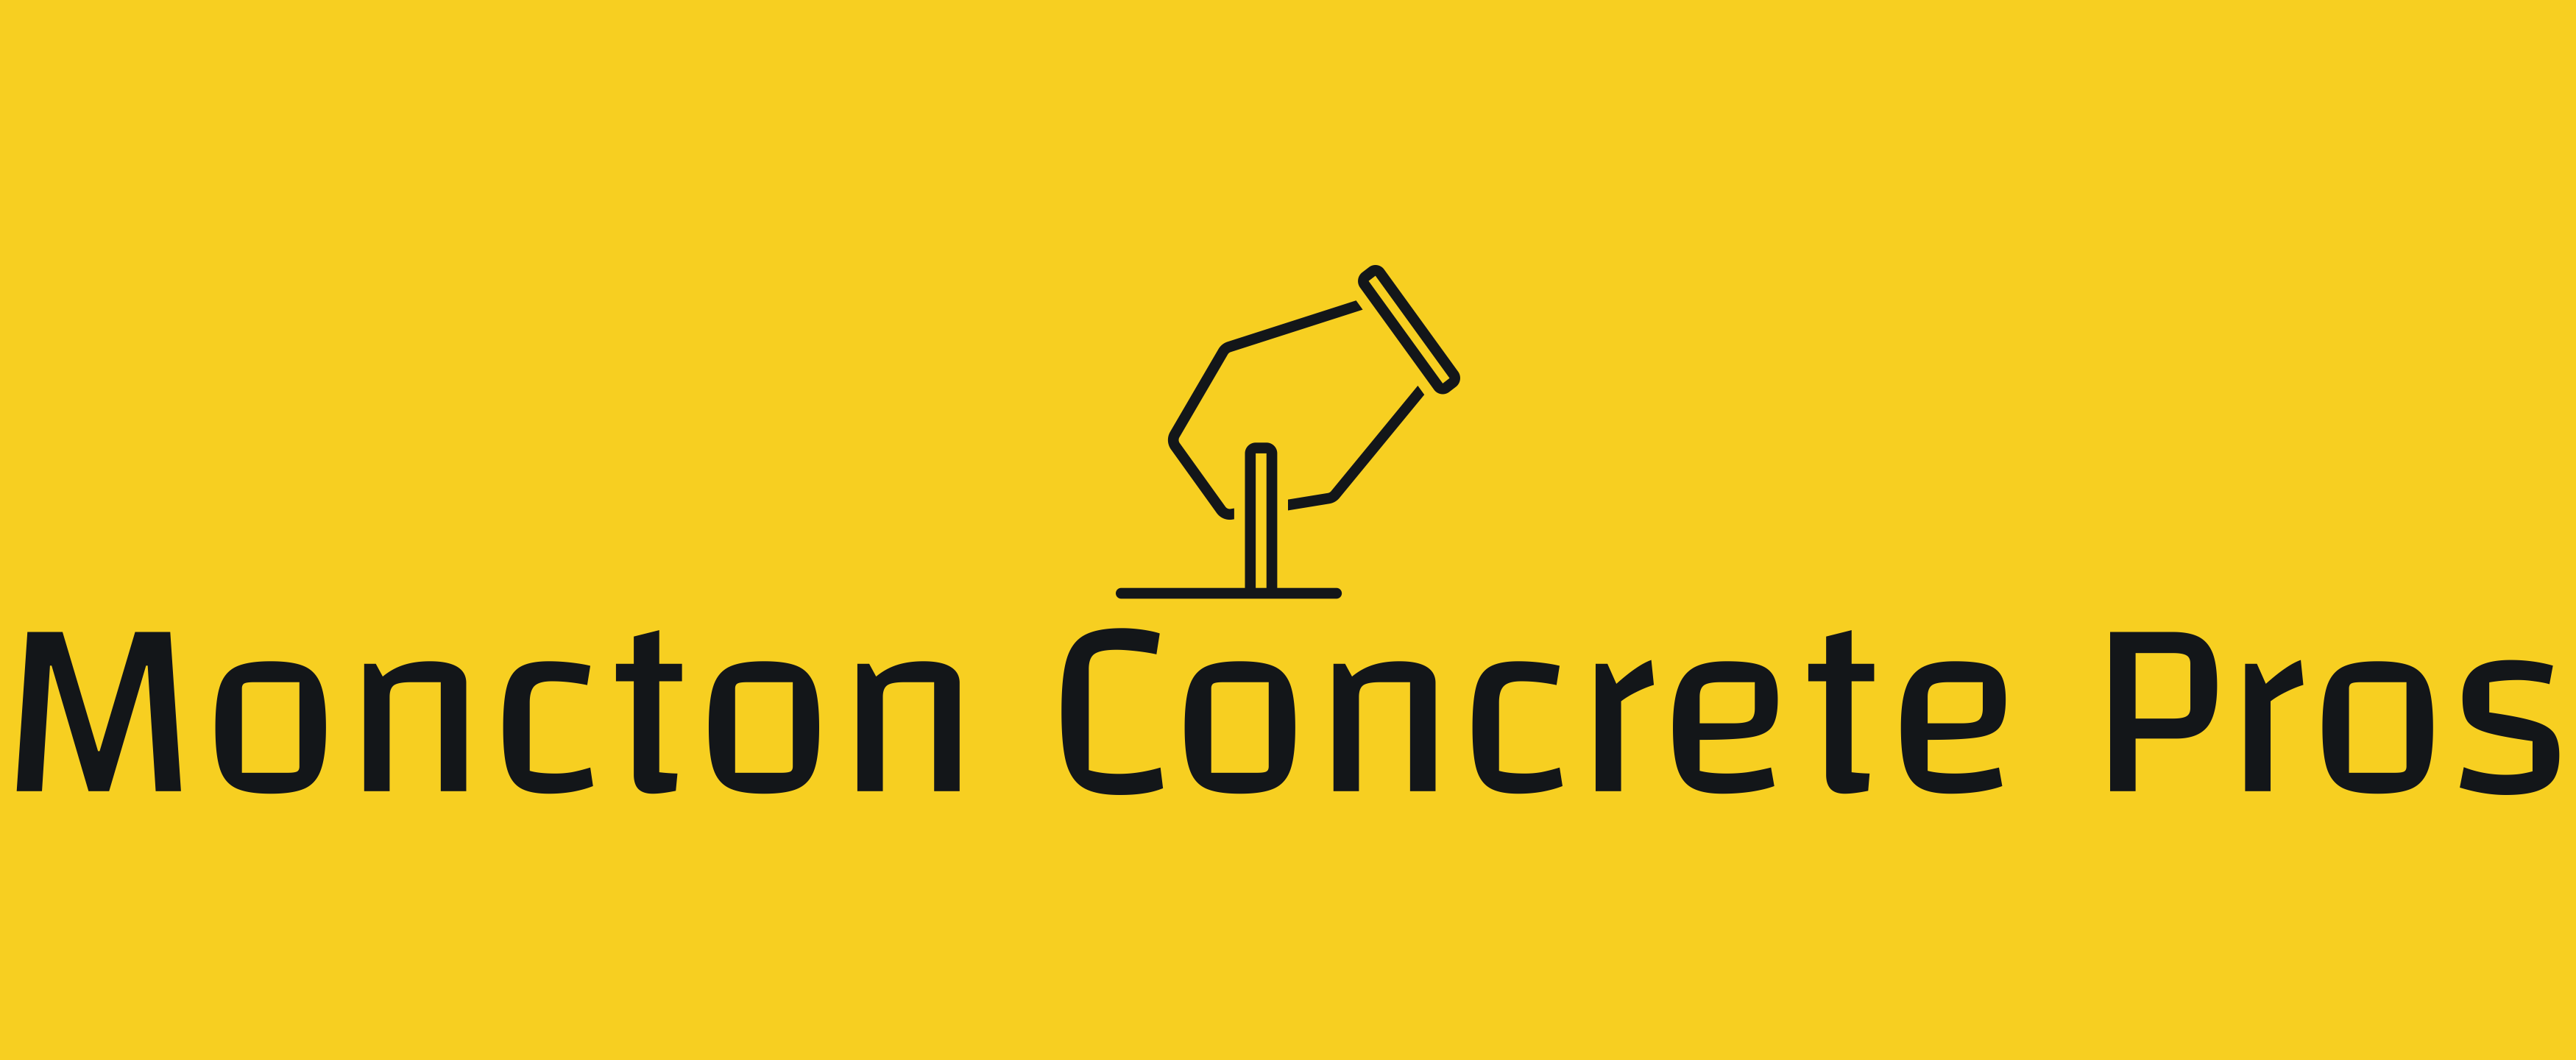 Moncton-Concrete-Pros-small-logo.png